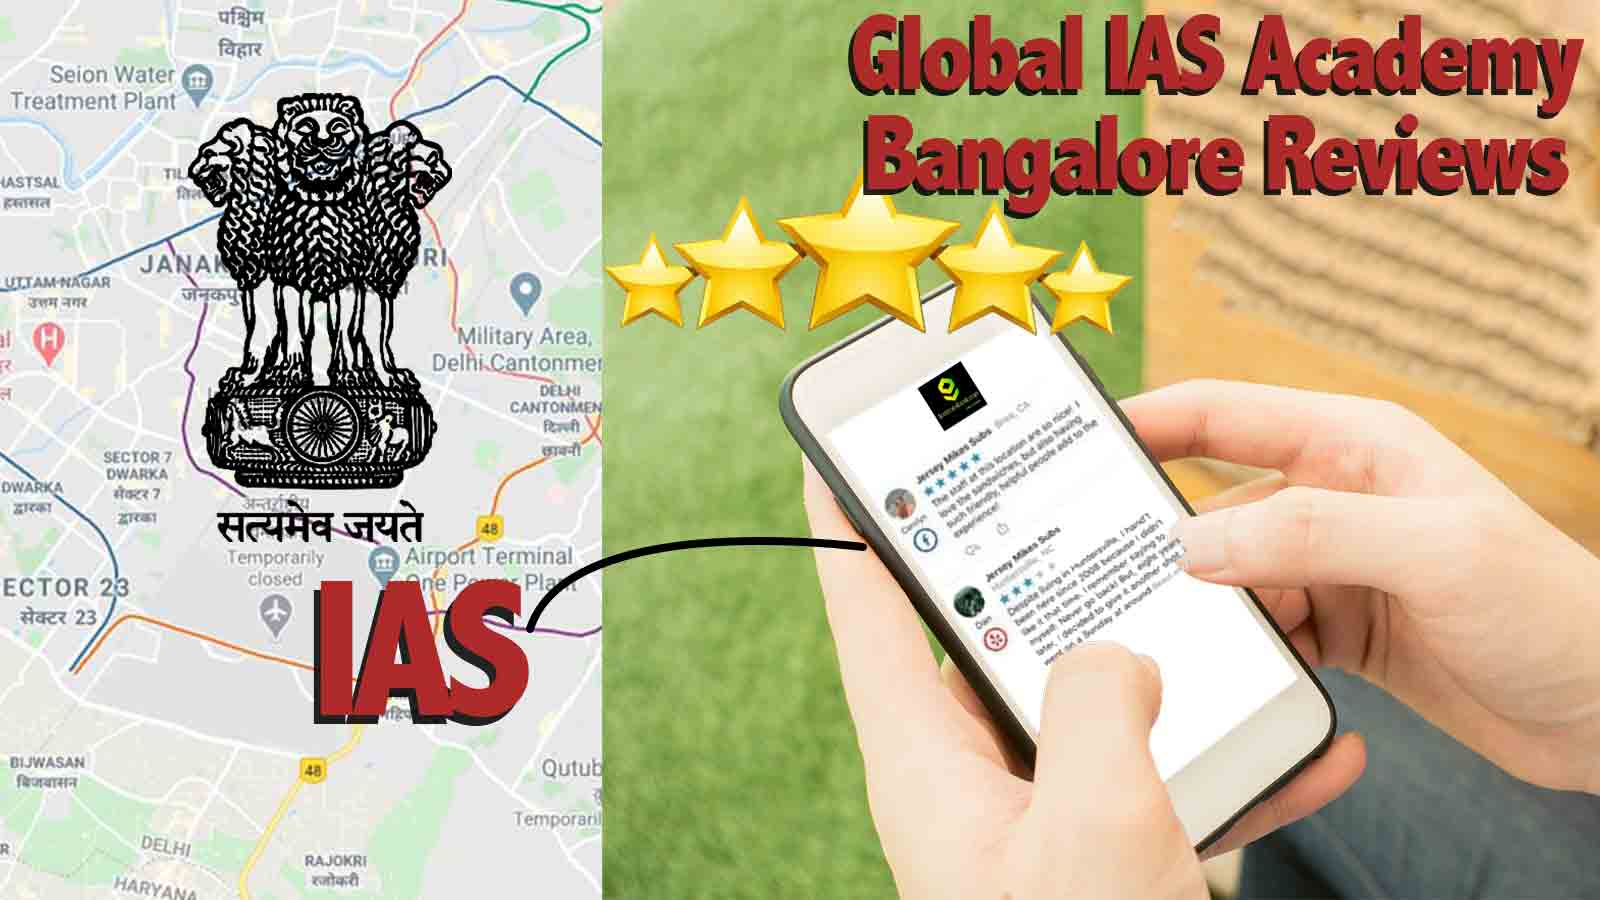 Global IAS Academy Bangalore Reviews